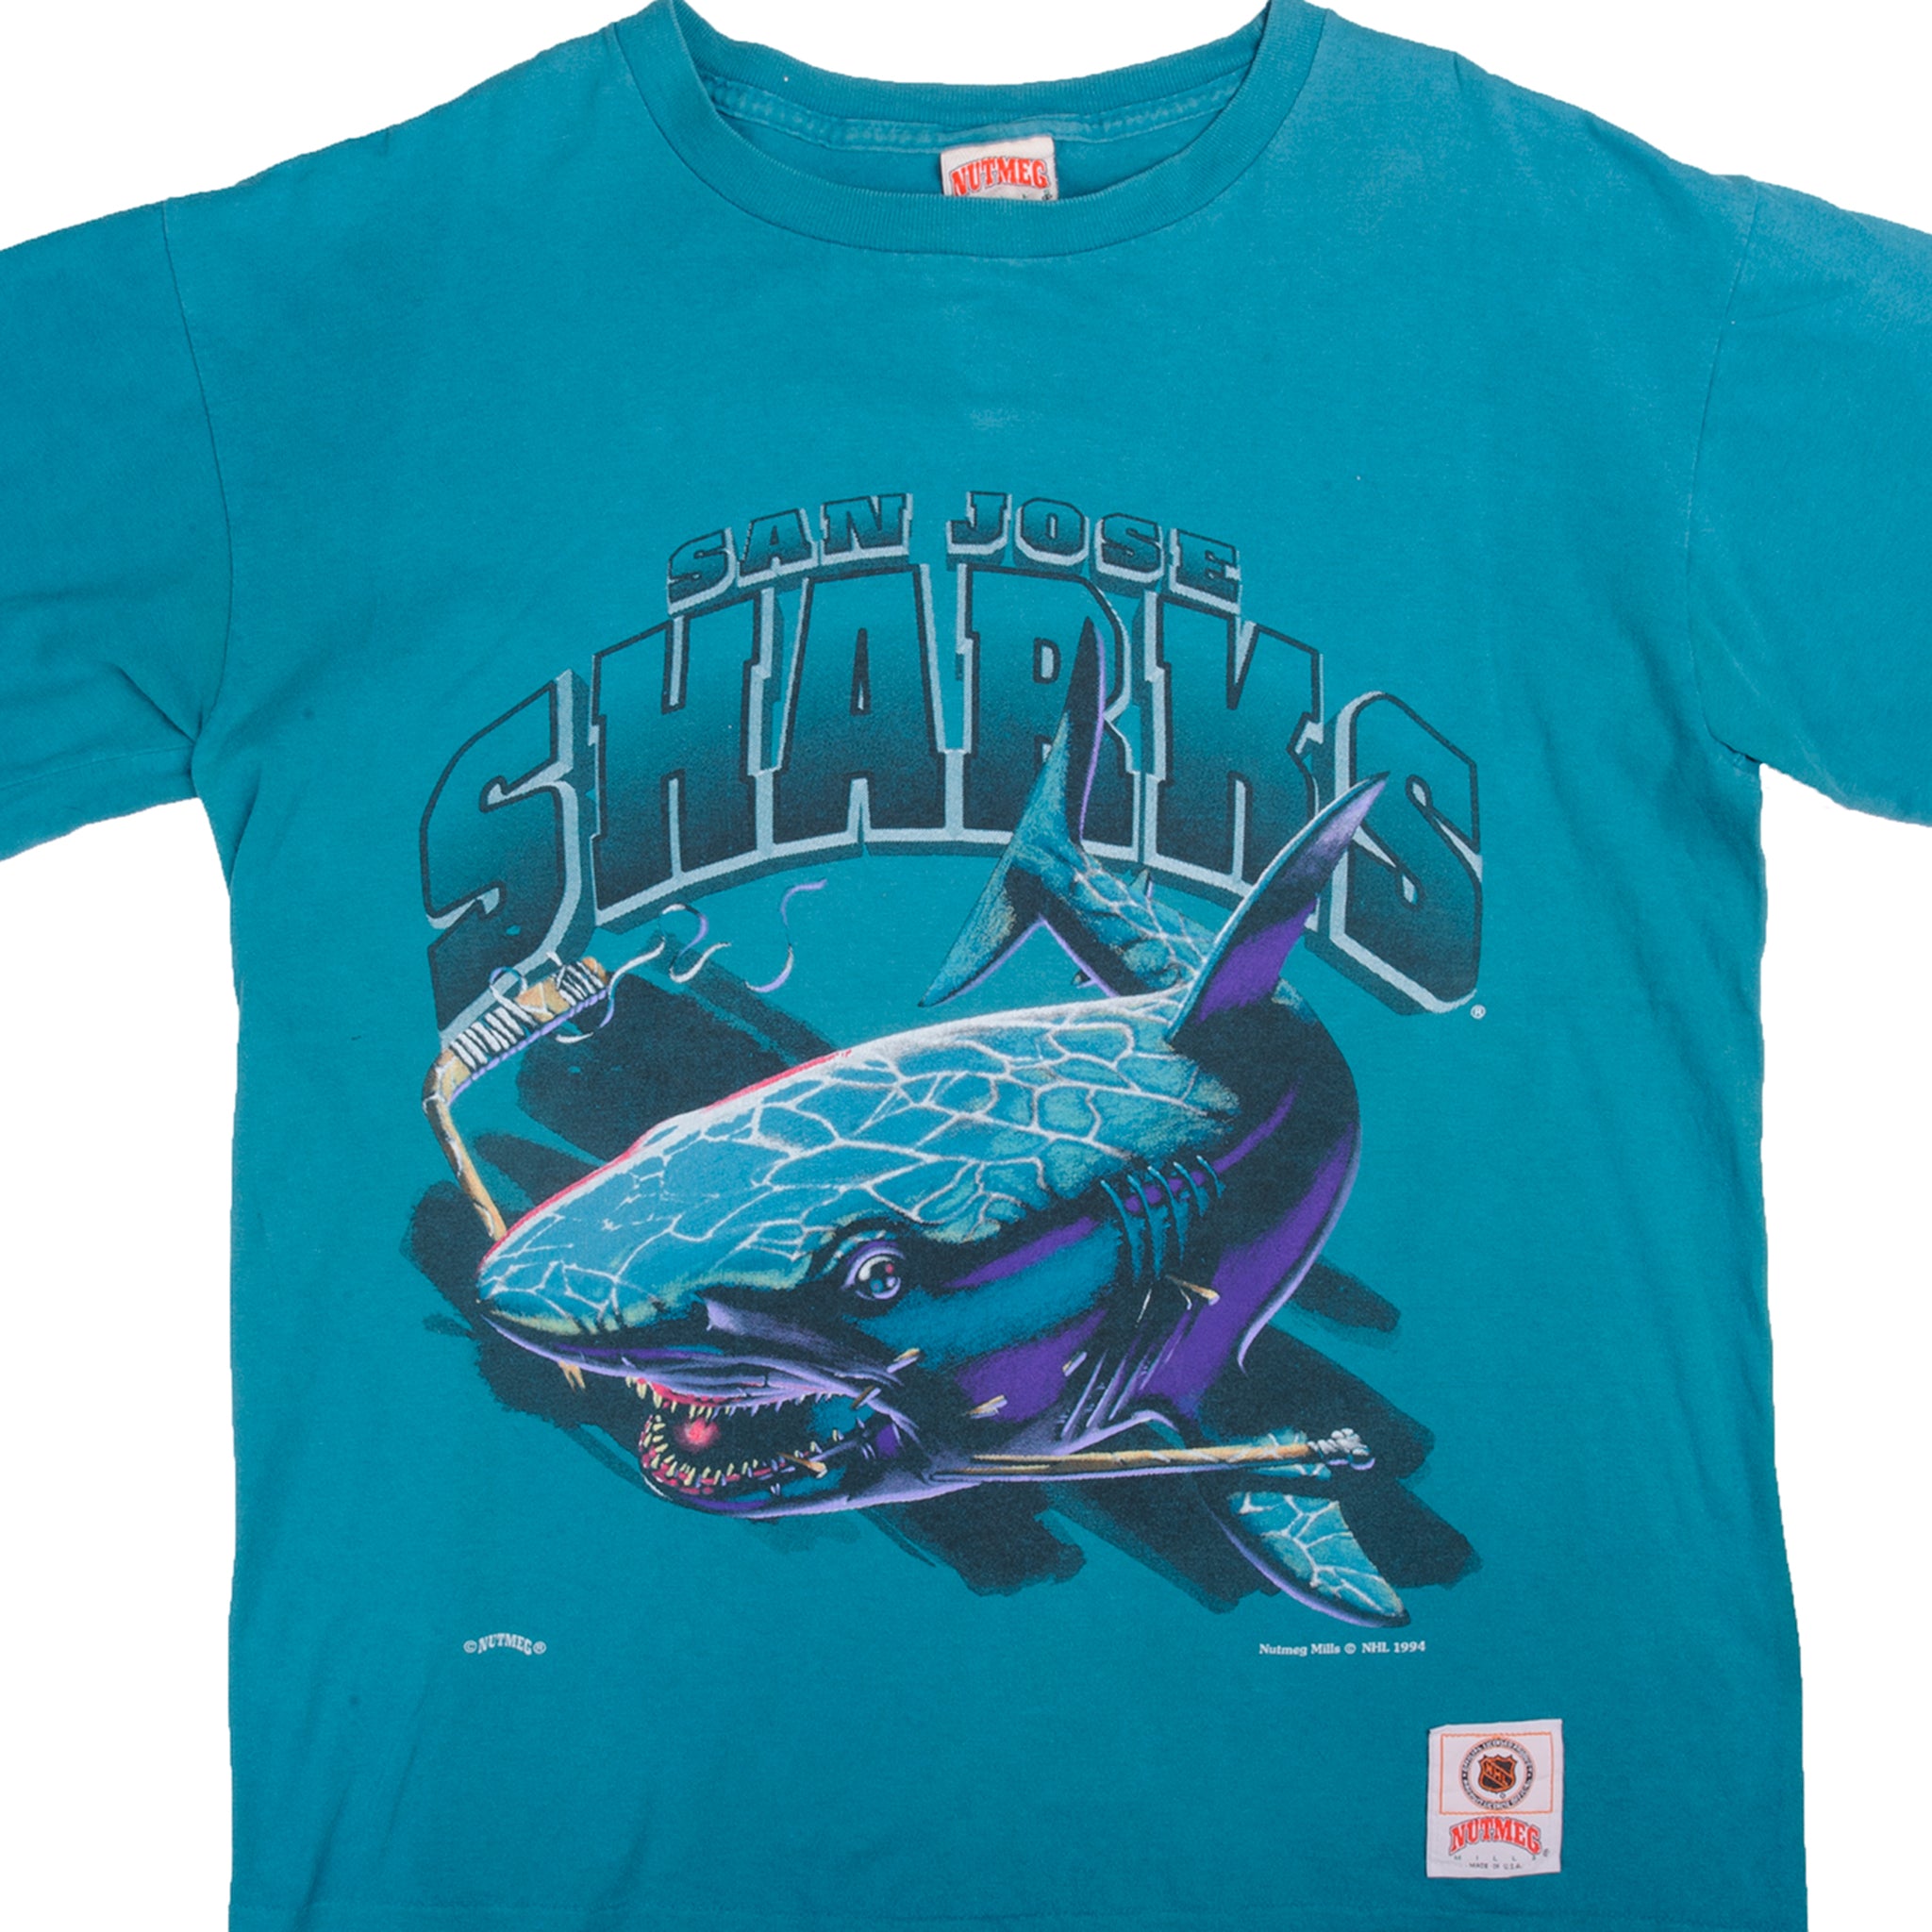 Stickers Printing Ottawa - Printing Shark